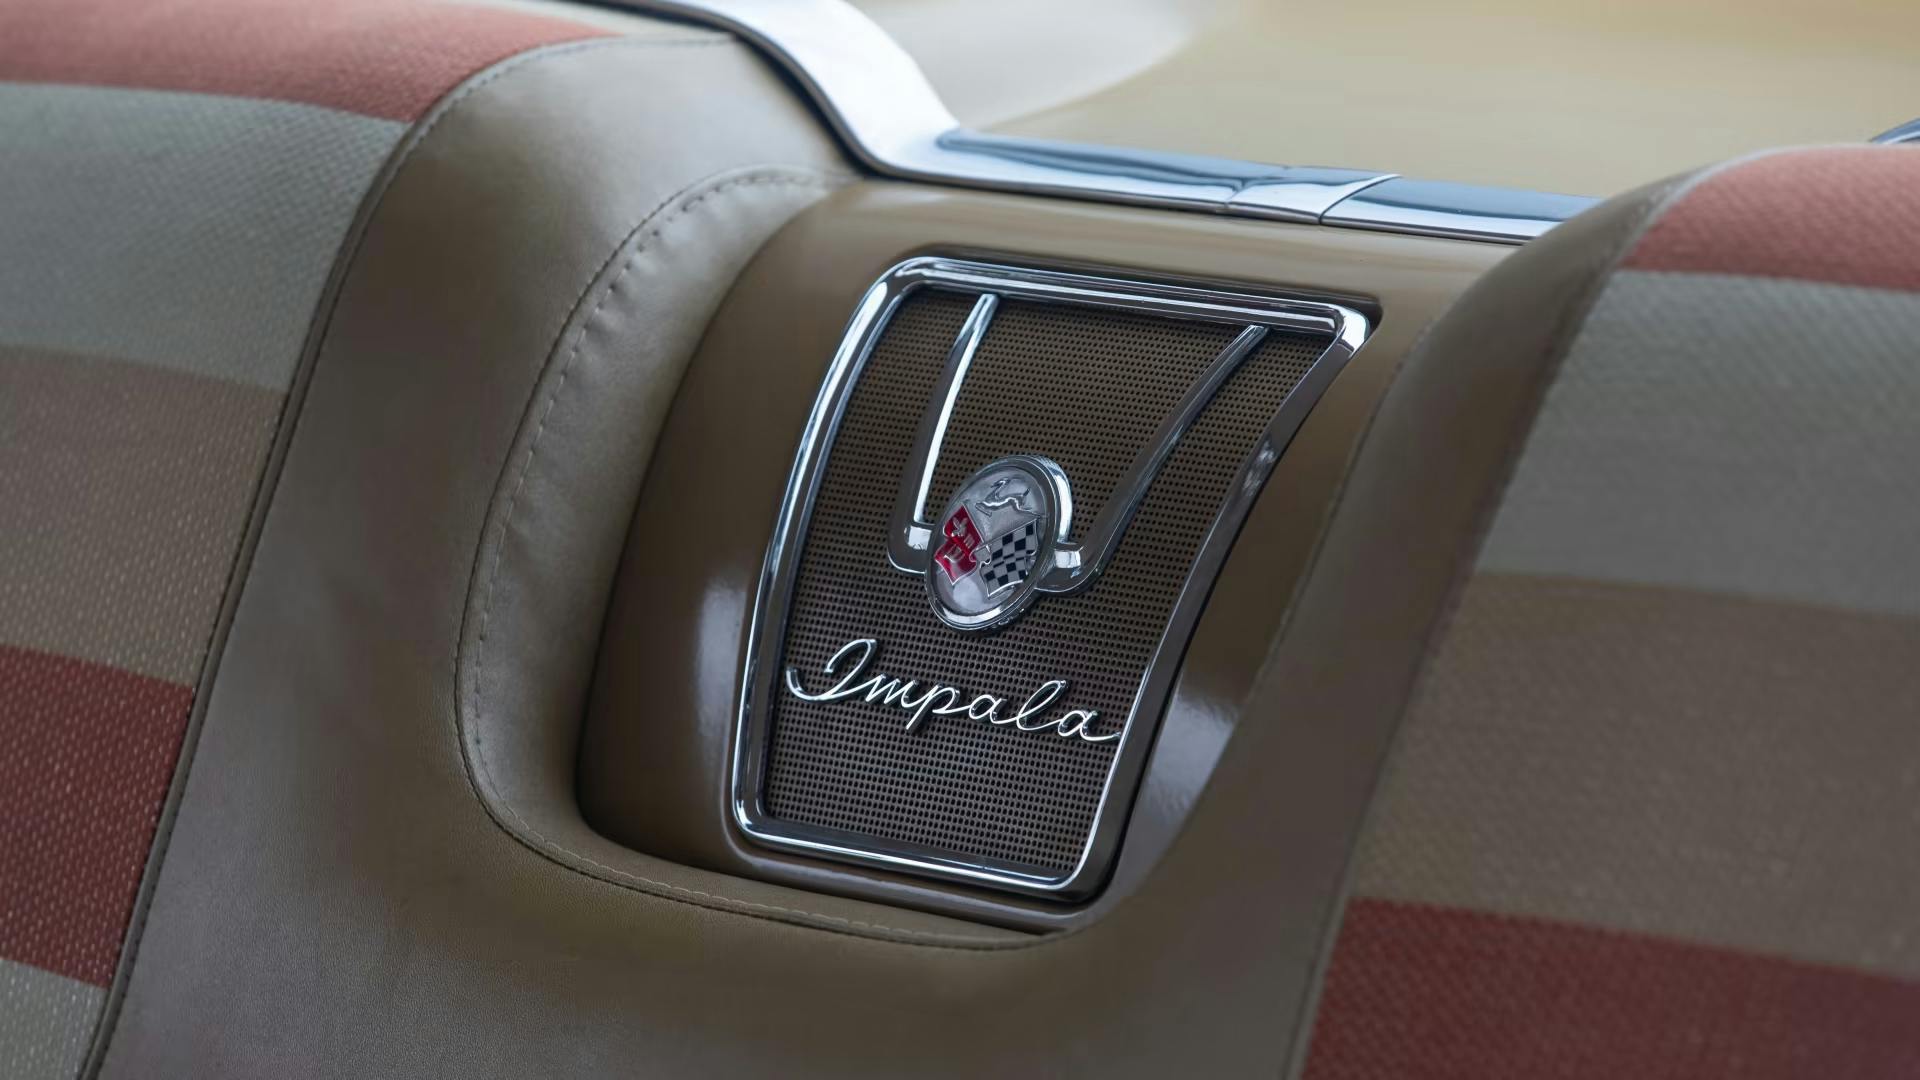 1958 Impala rear seat detail great car names